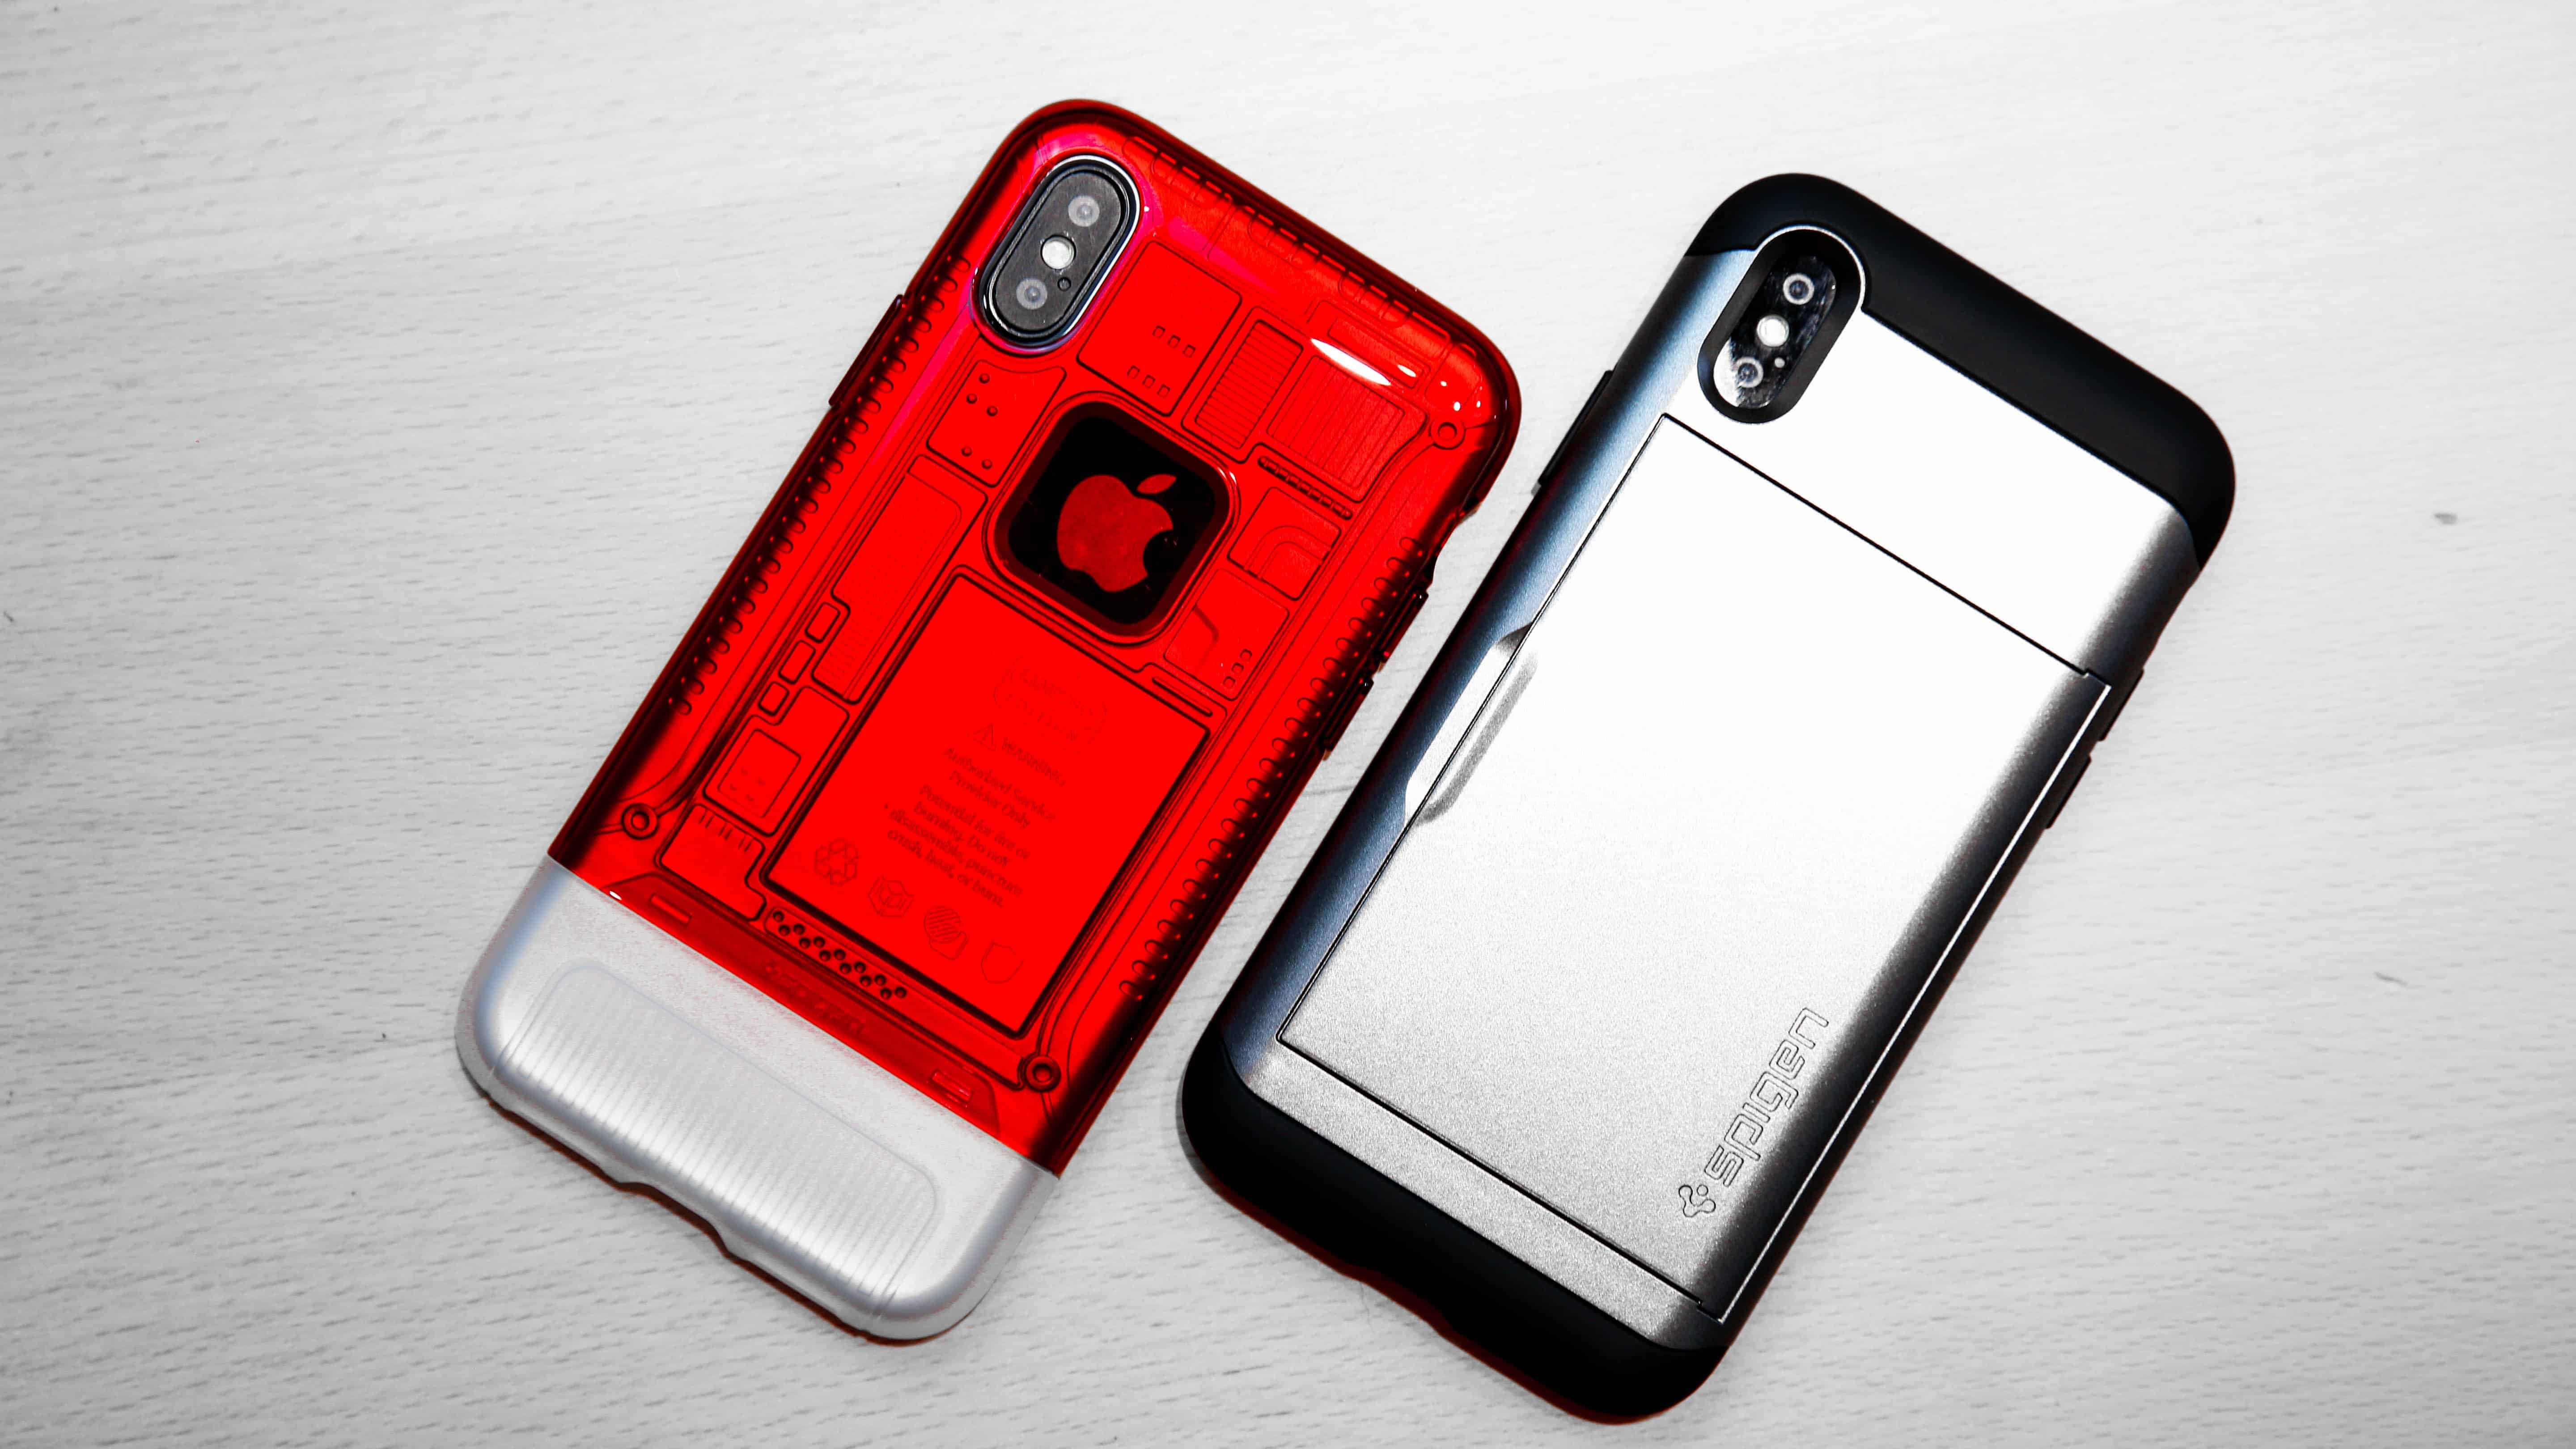 Spigen iPhone XS cases